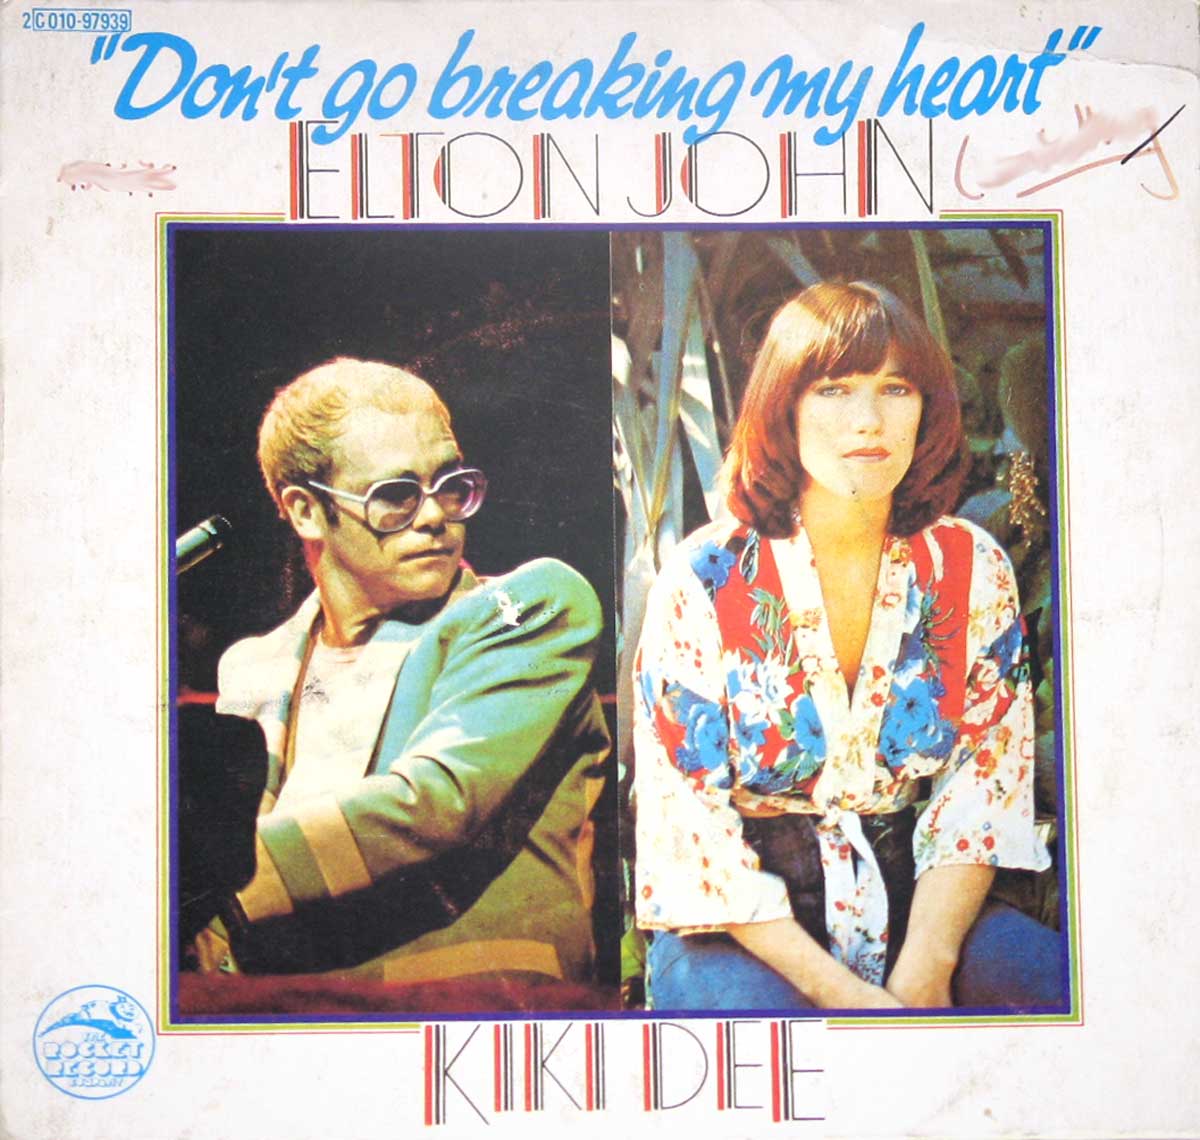 large album front cover photo of: ELTON JOHN & KIKI DEE - Dont go breaking my Heart 